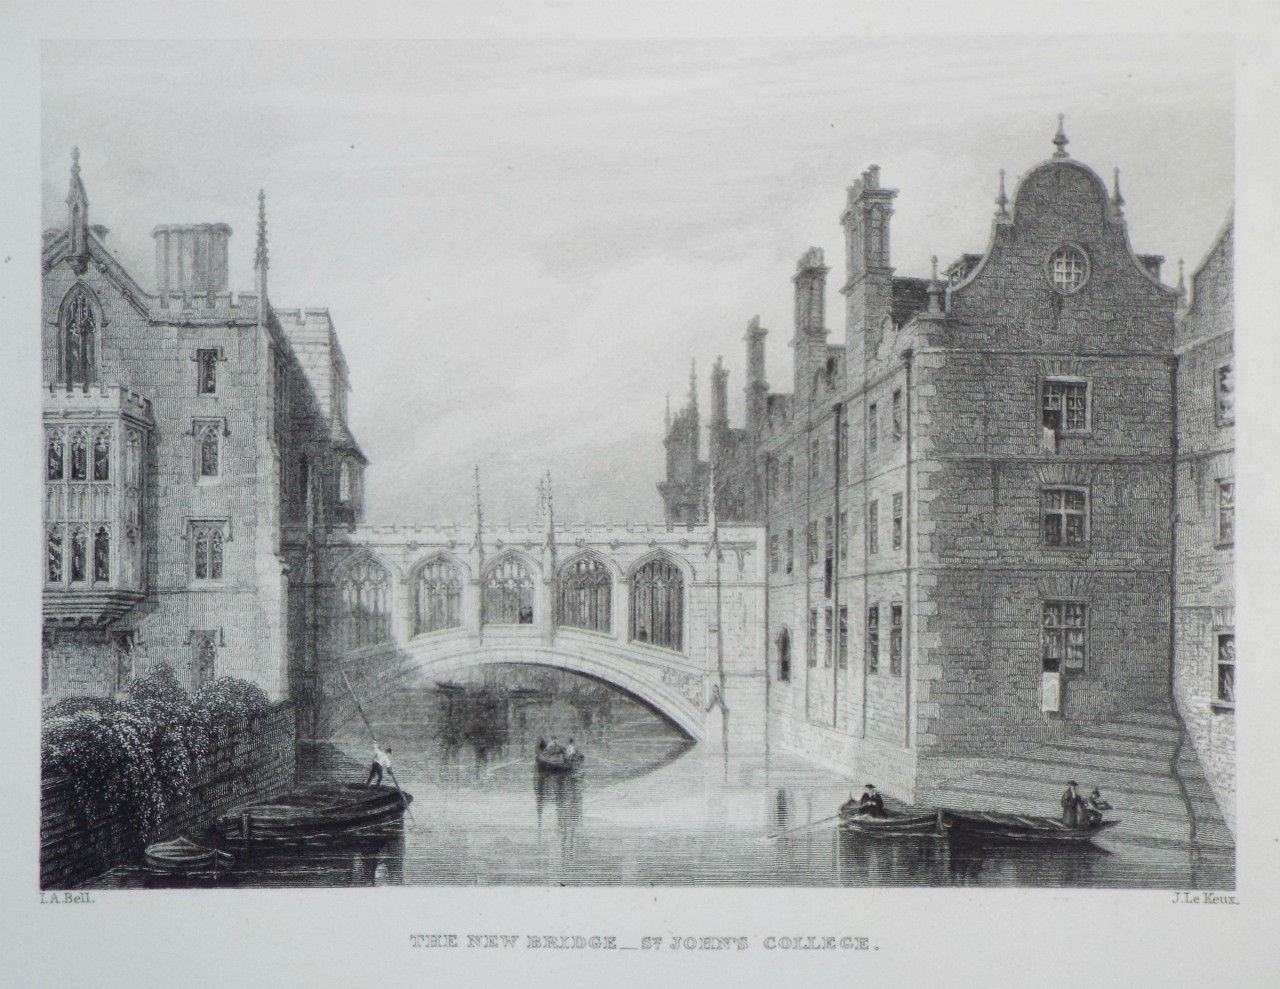 Print - The New Bridge - St. John's College. - Le